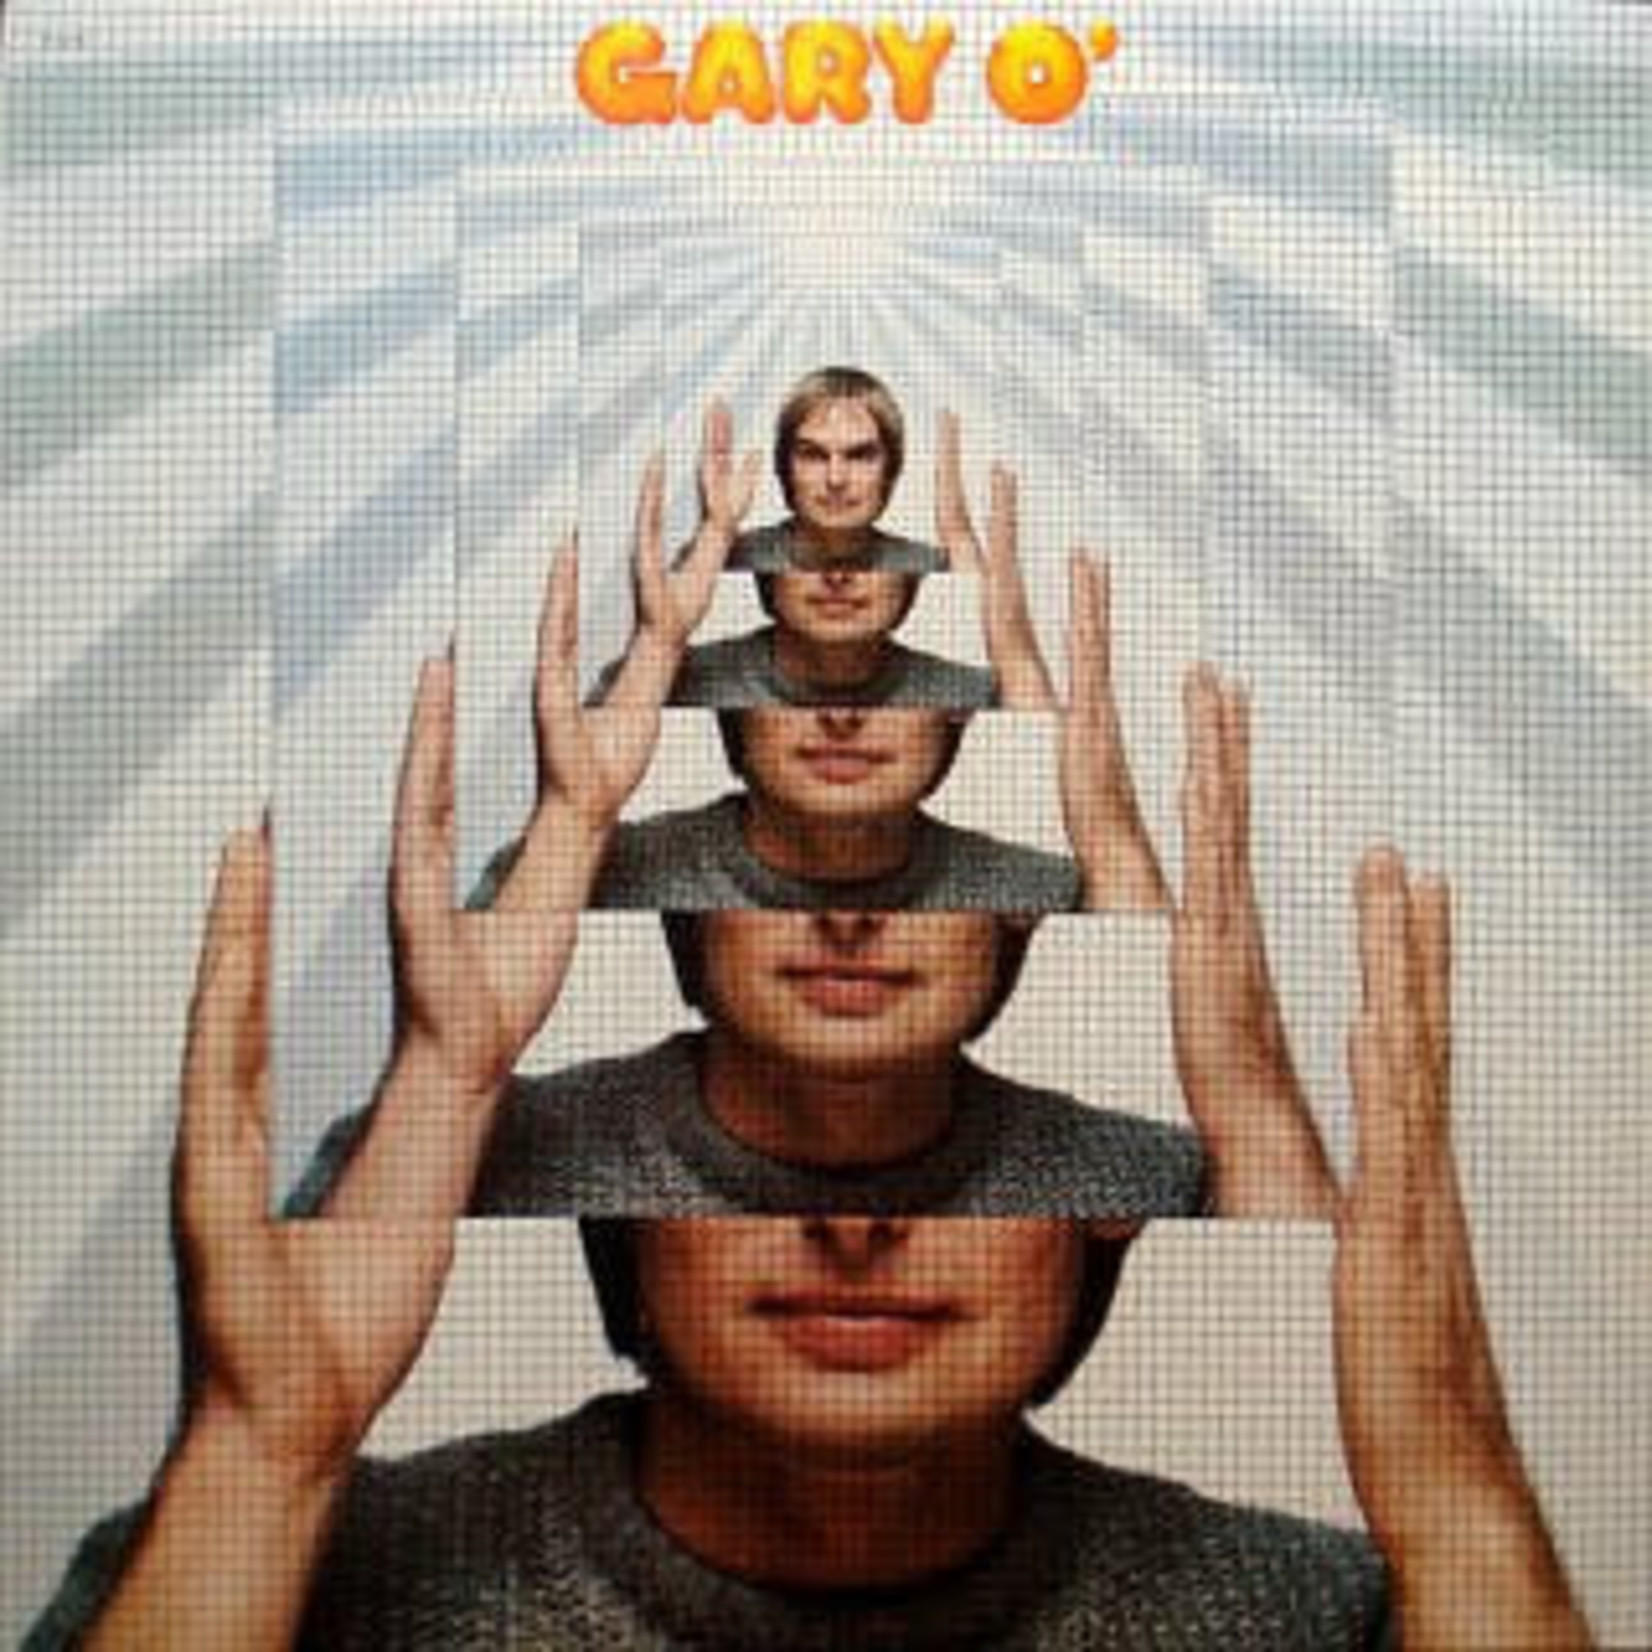 Gary O': self-titled [VINTAGE]